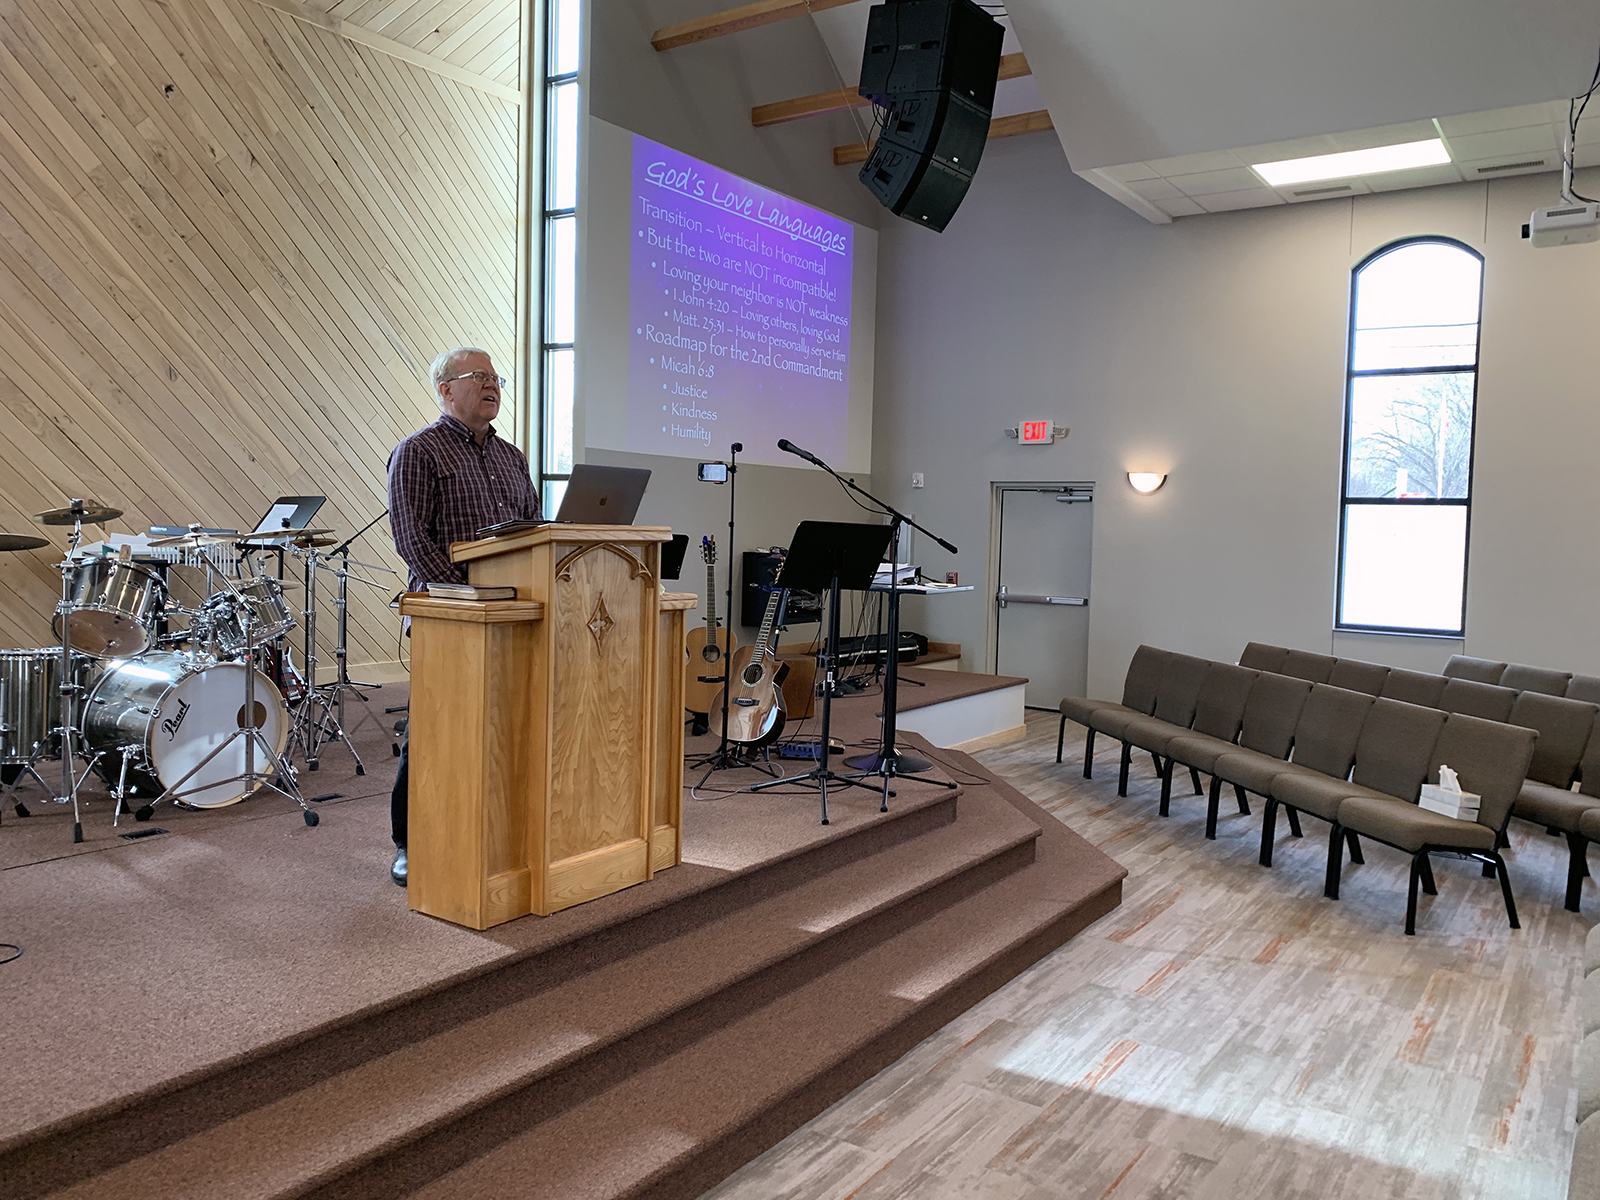 The Rev. Derek Miller leads the worship service at Cornerstone Church of Spring Green, Sunday, Nov. 7, 2021, in Spring Green, Wisconsin. RNS photo by Bob Smietana